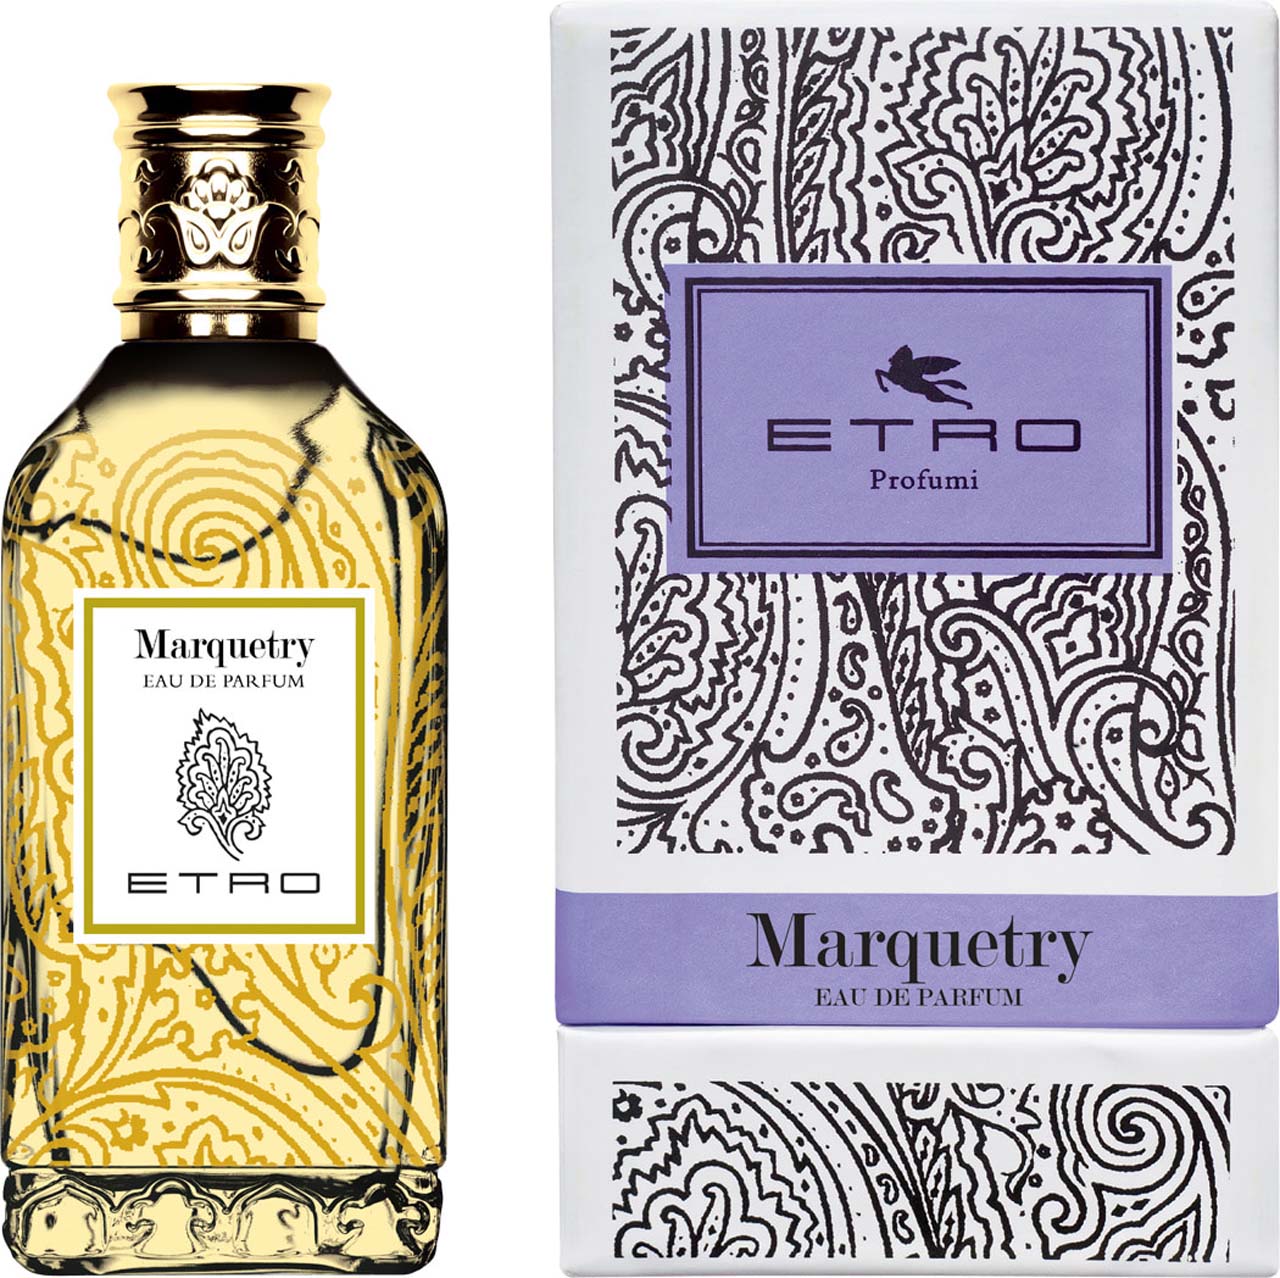 etro_marquetry_eau_de_parfum_spray_100ml_with_box